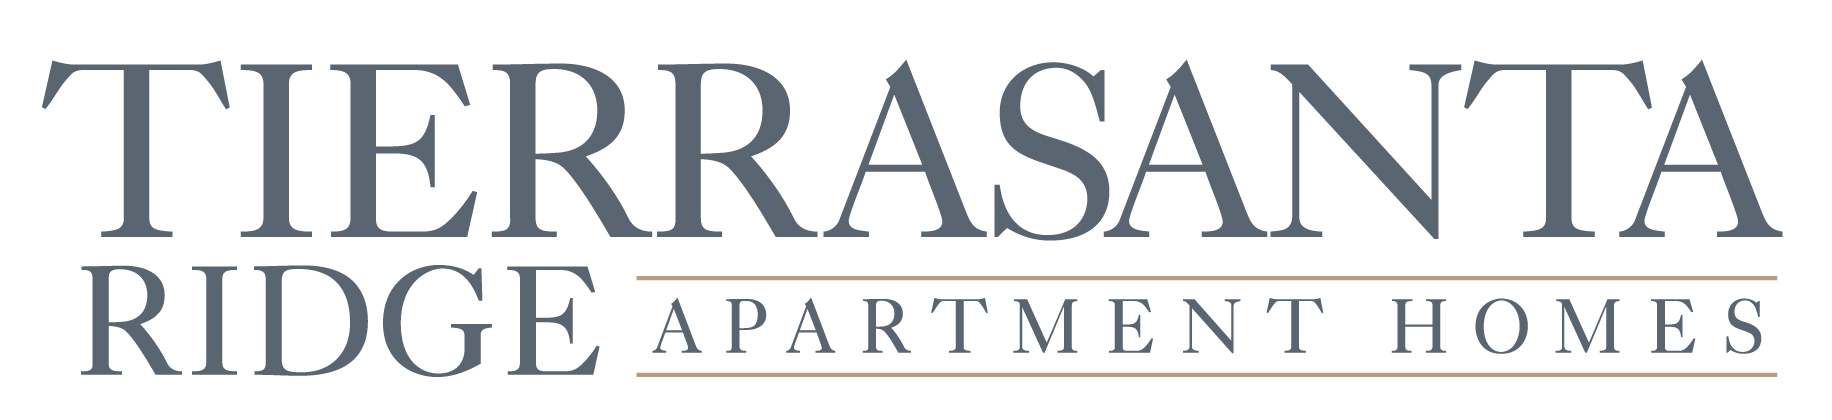 Tierrasanta Ridge Apartment Homes Logo